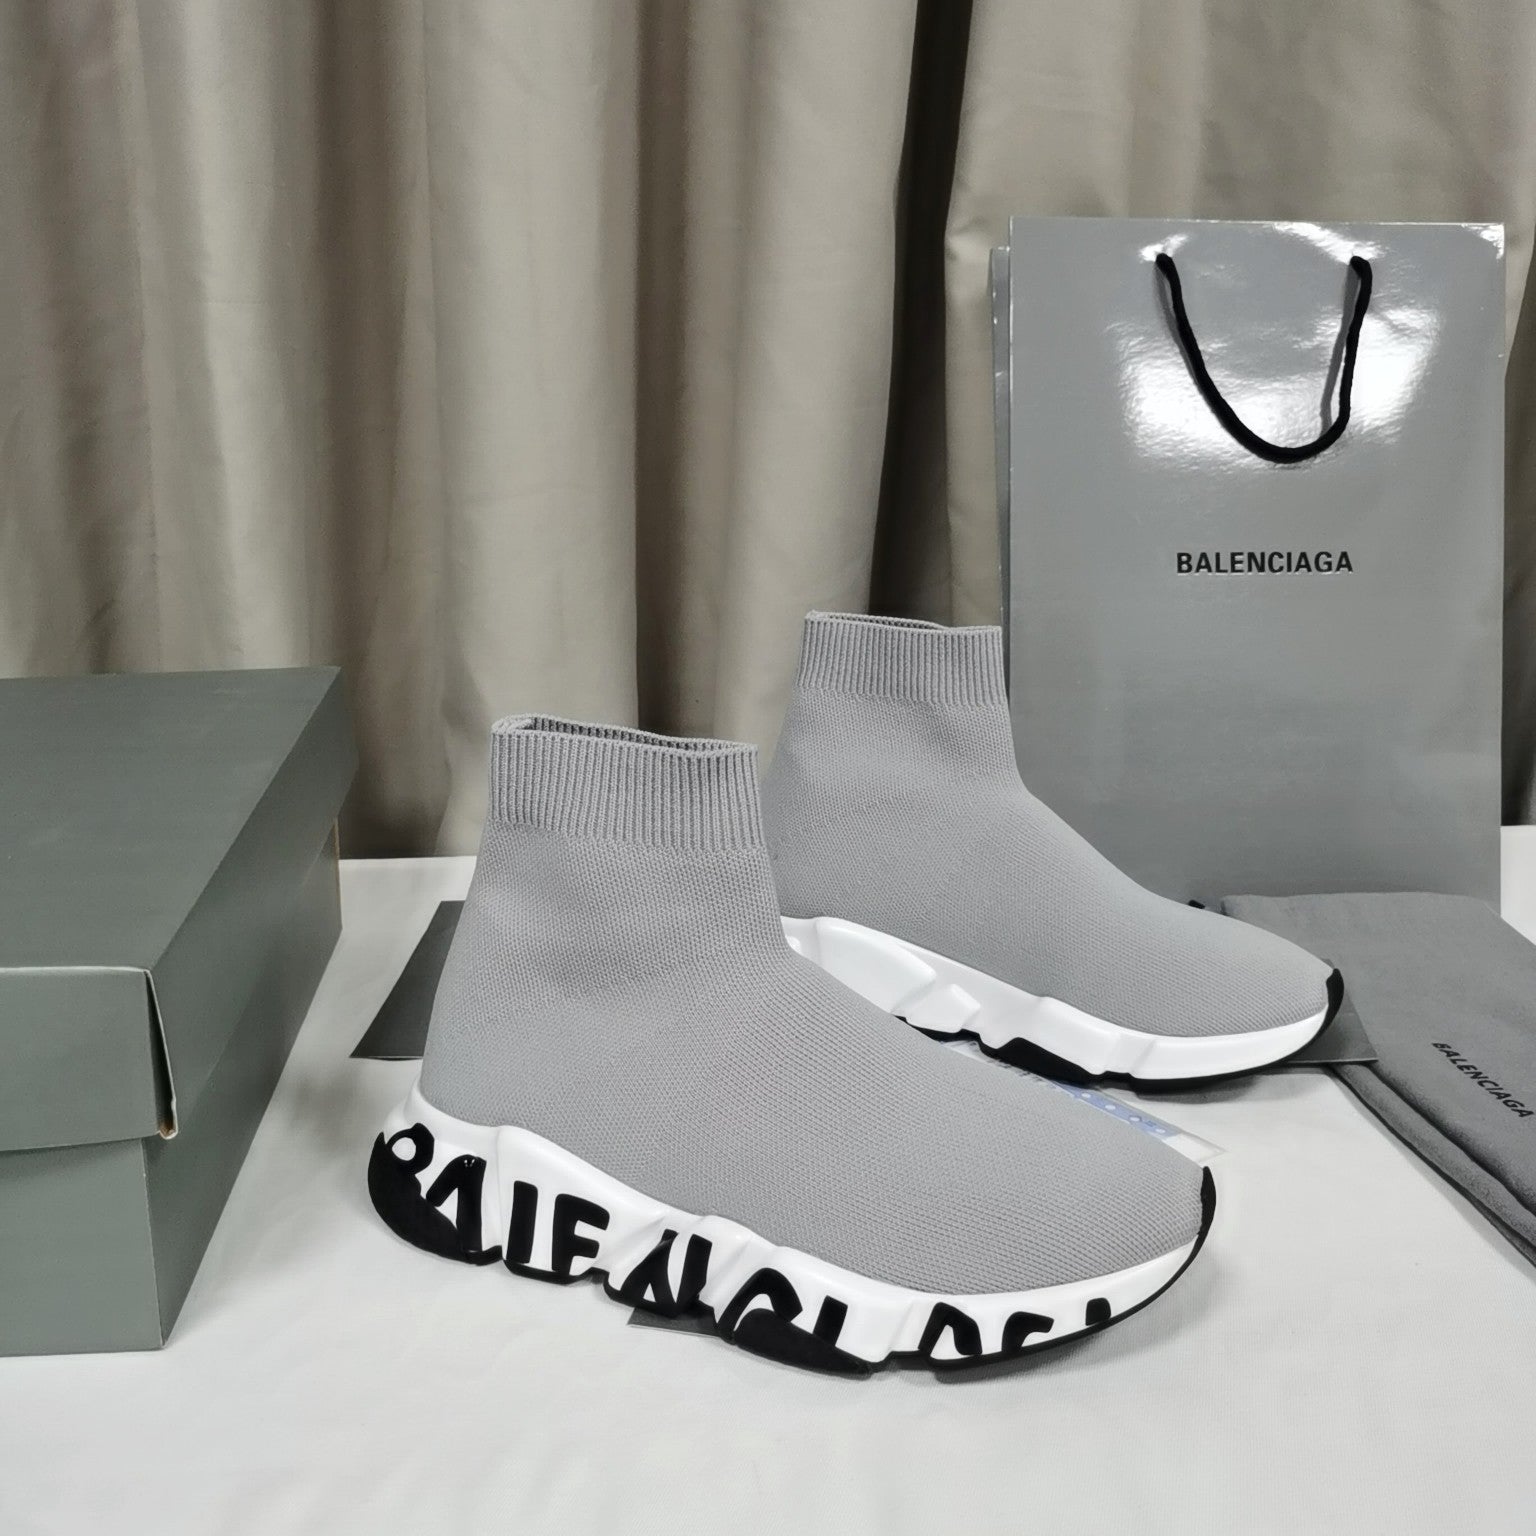 Balenciaga Fashion Sock Boots Woman Men Casual Shoes Breathable 